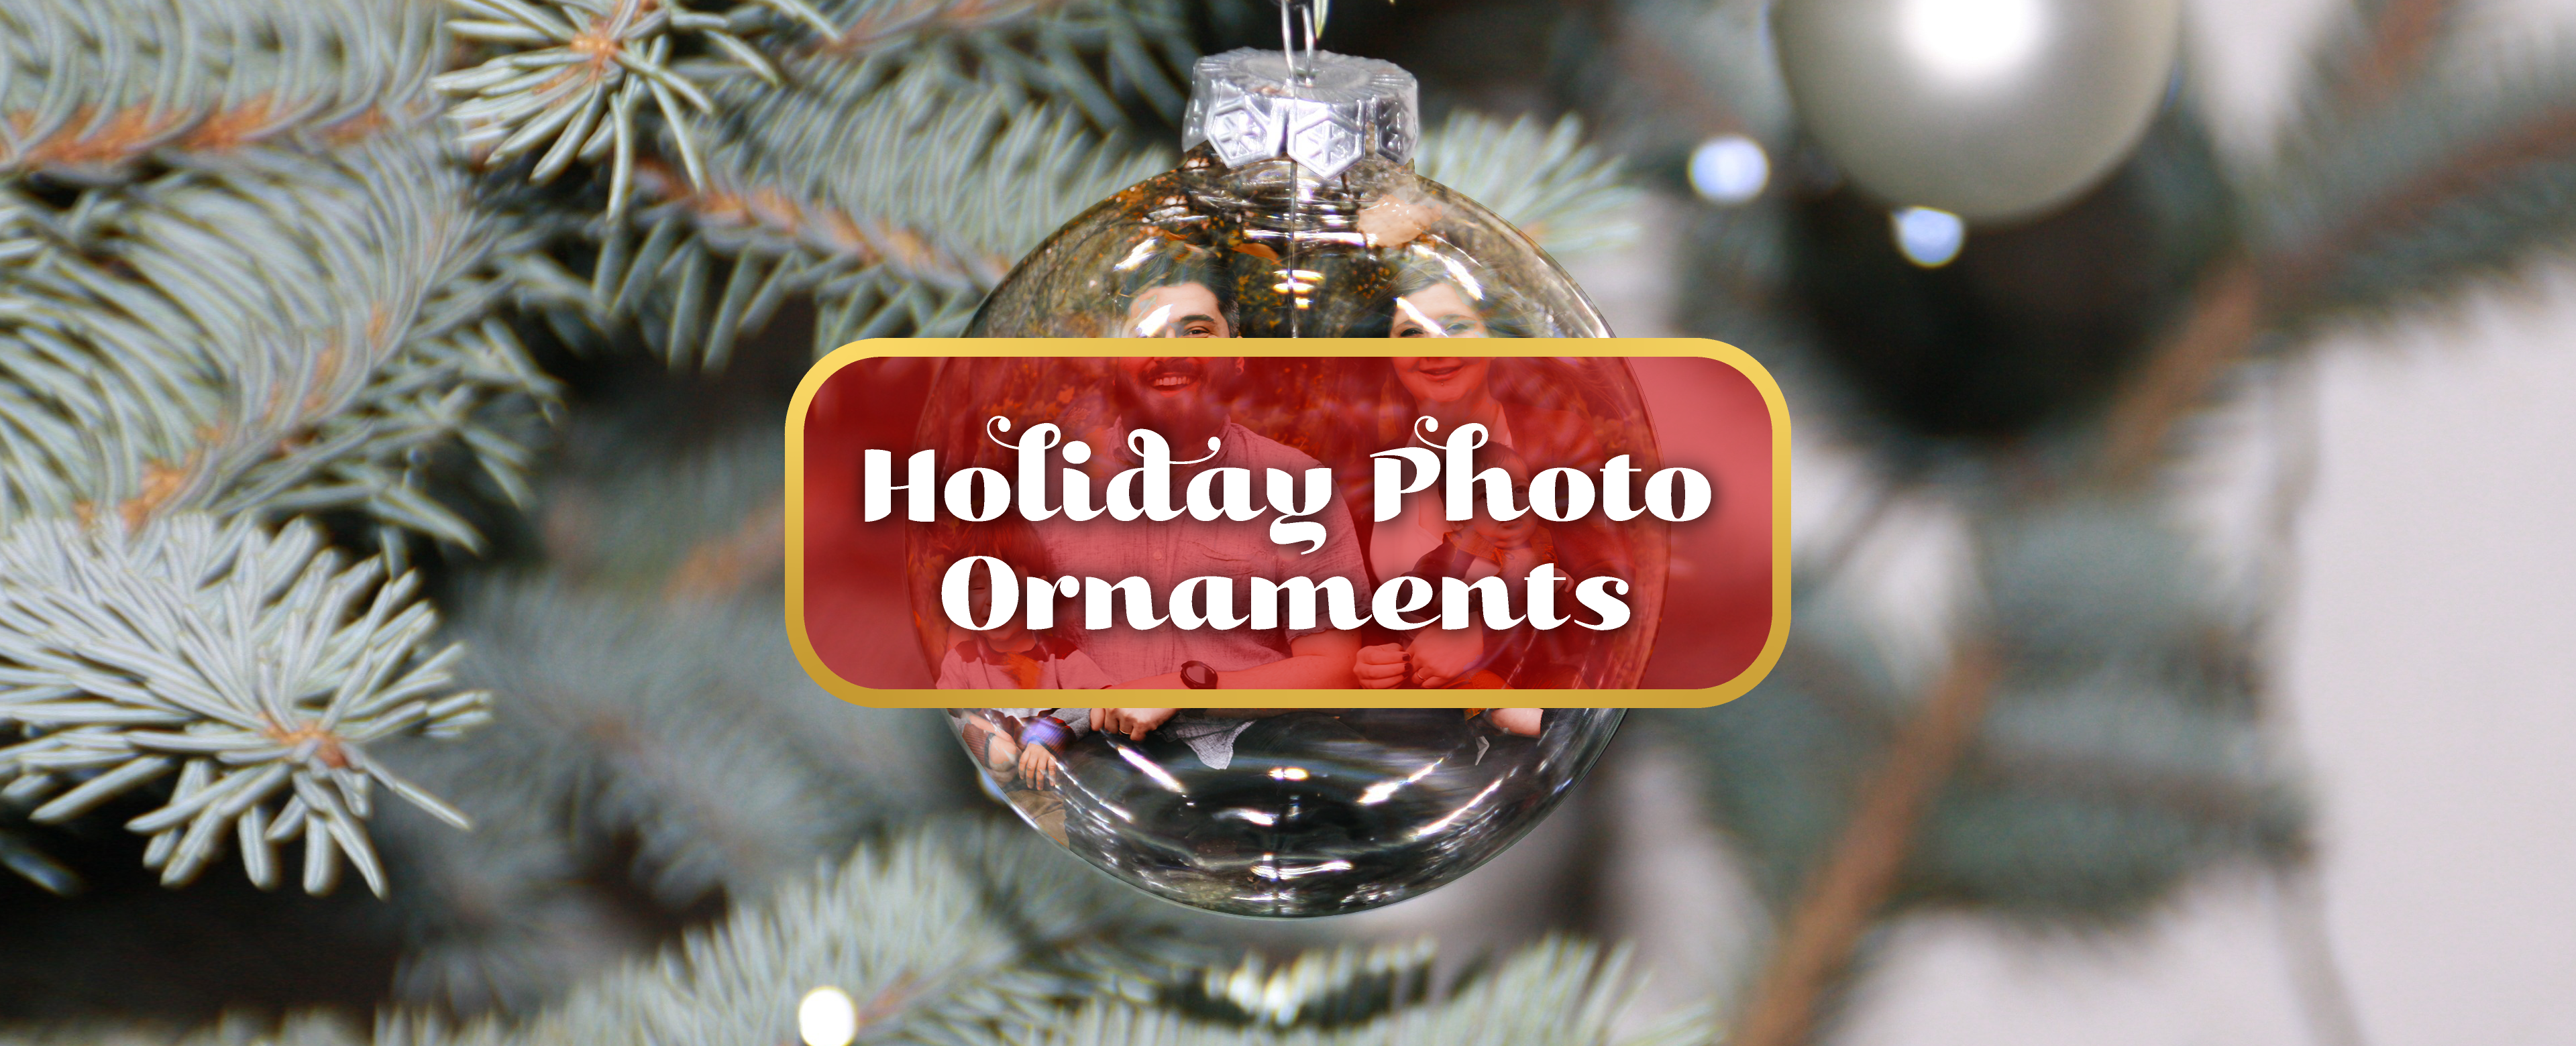 Canceled-Holiday Photo Ornaments 